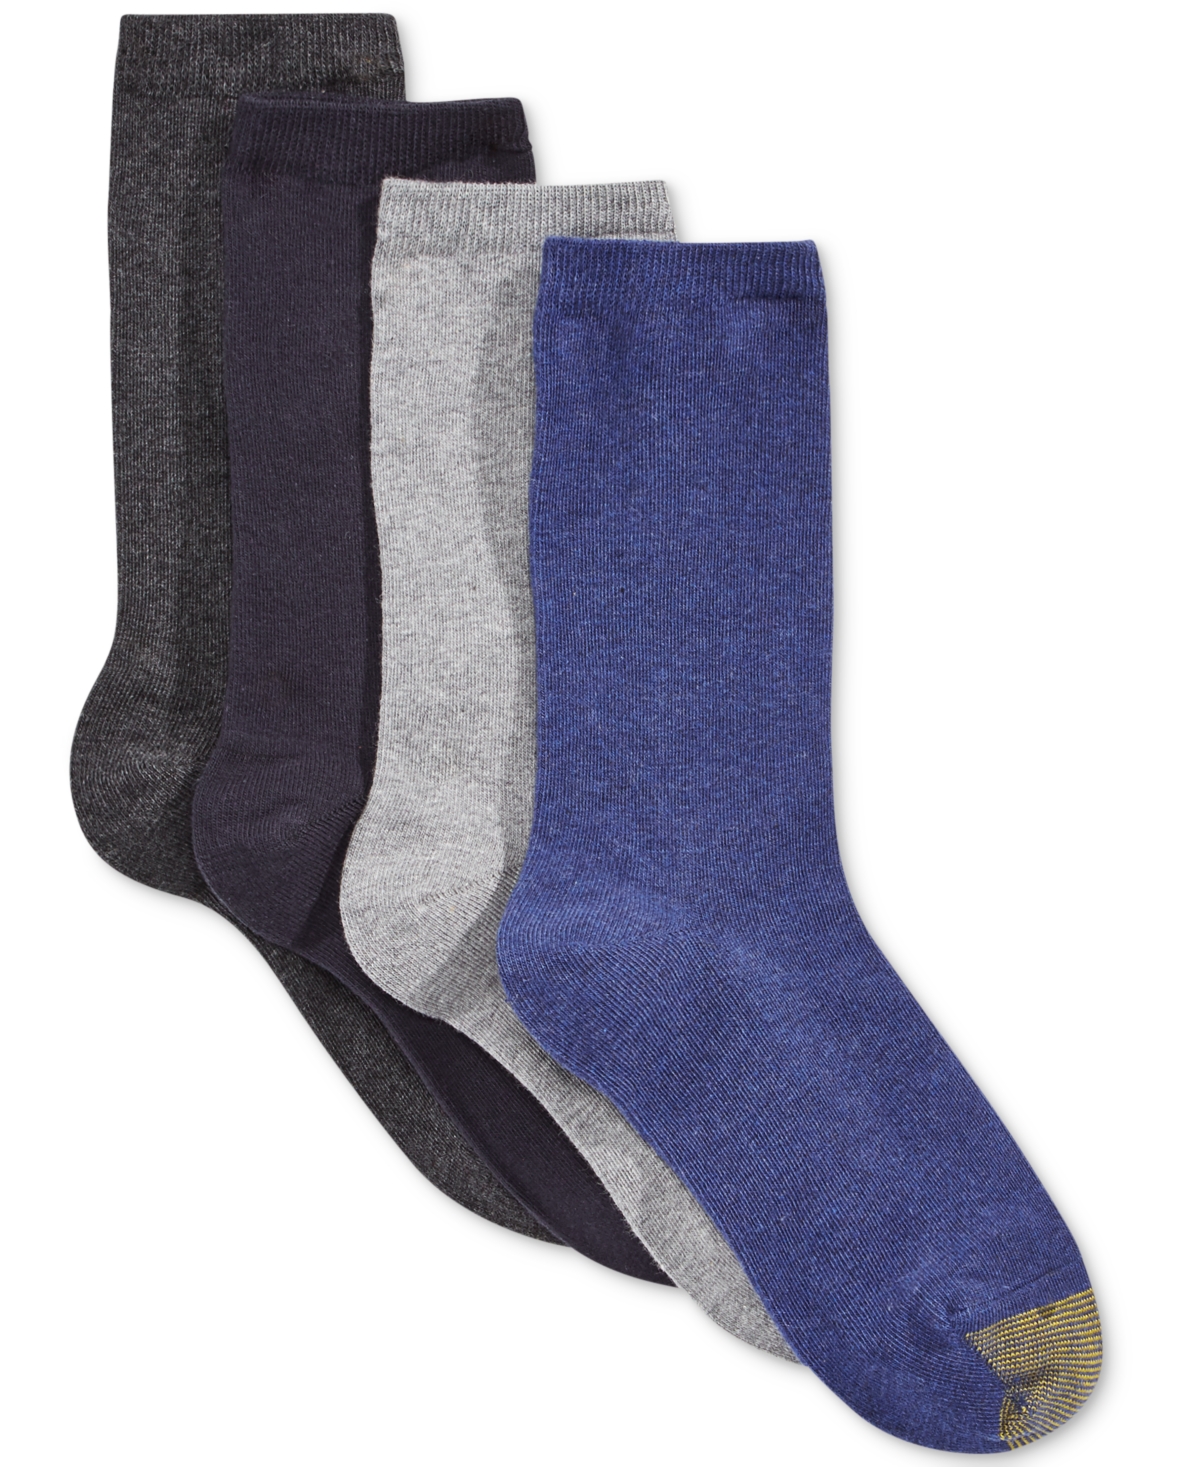 Women's 4-Pack Casual Flat Knit Socks, Created For Macys - Black